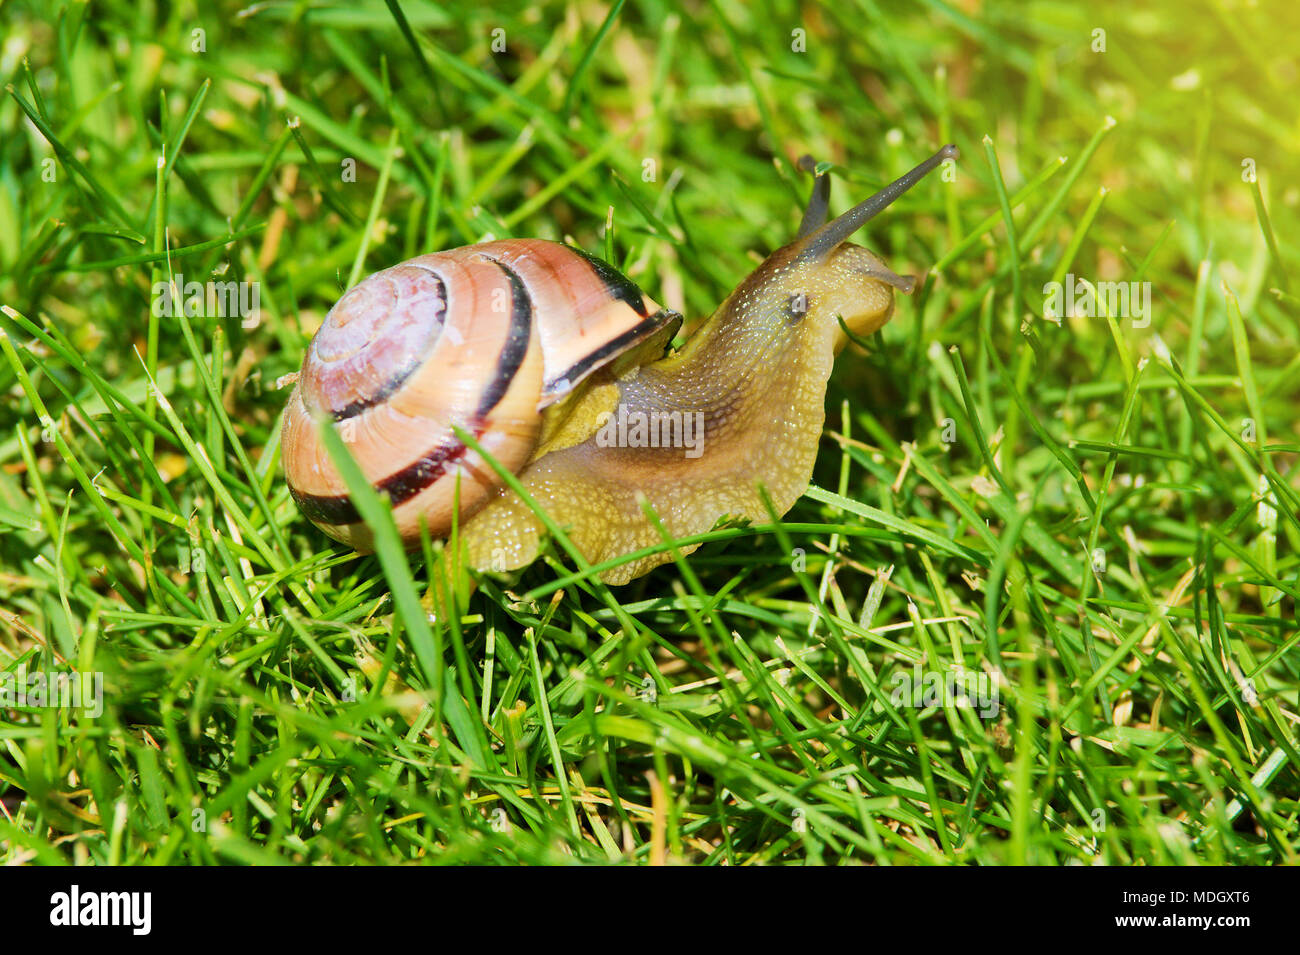 Grove snail or brown-lipped snail, Cepaea nemoralis, sliding through fresh green grass. Closeup of land snail with spiral shell on meadow. Stock Photo